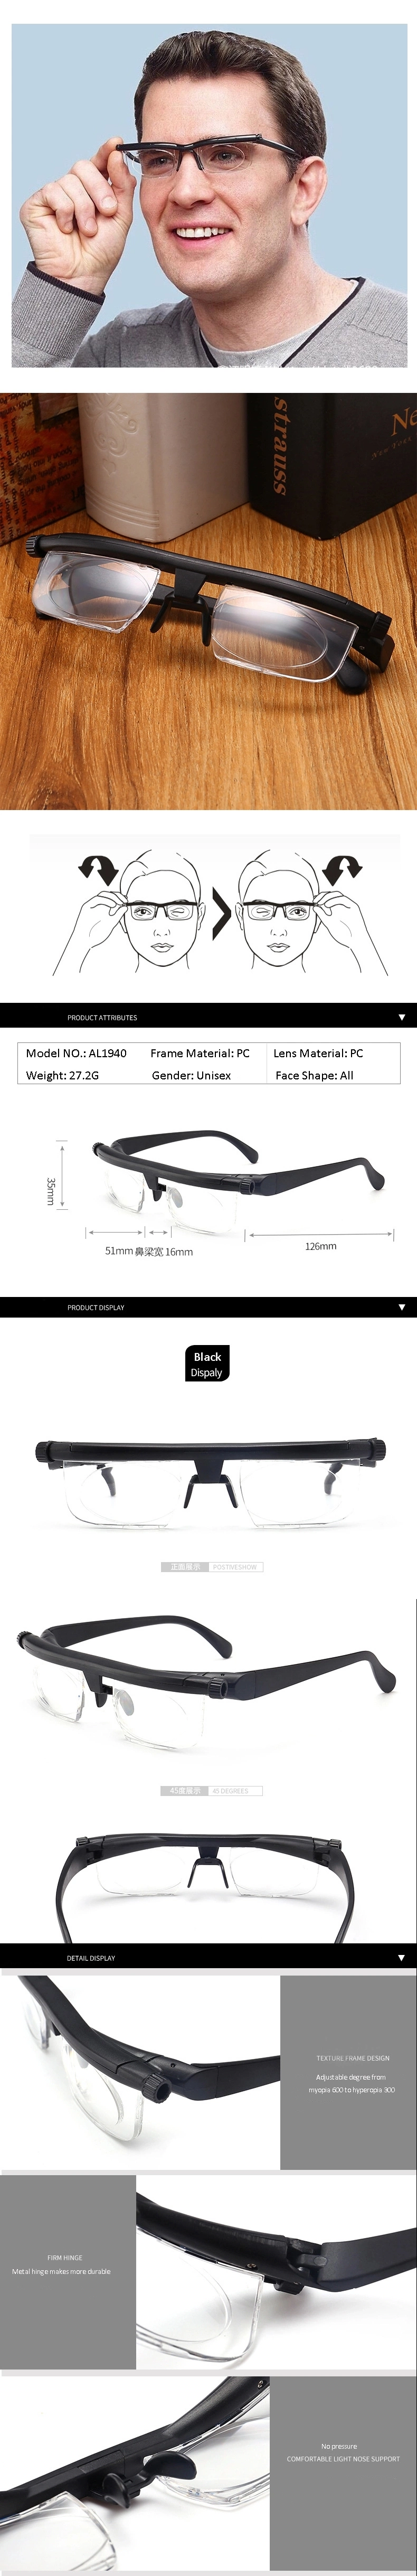 Adjustable Myopia -6D to +3D Variable Lens Binocular Magnifying Reading Glasses